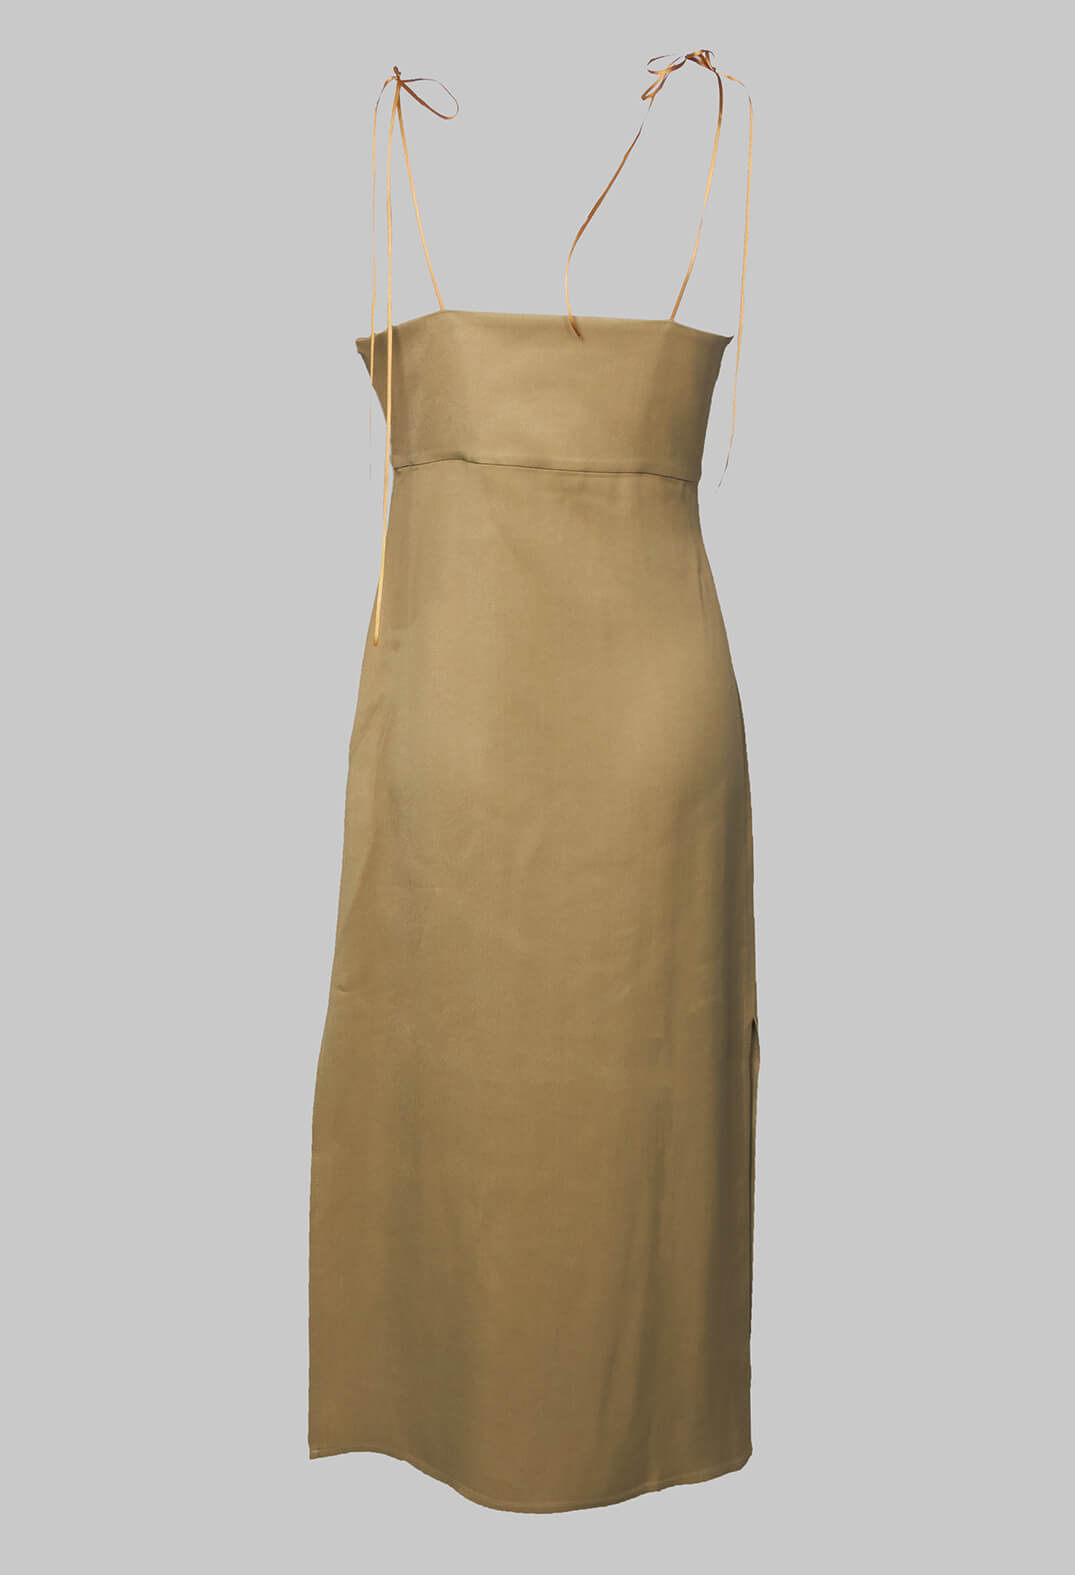 Midi Length Dress with Side Splits in Sand